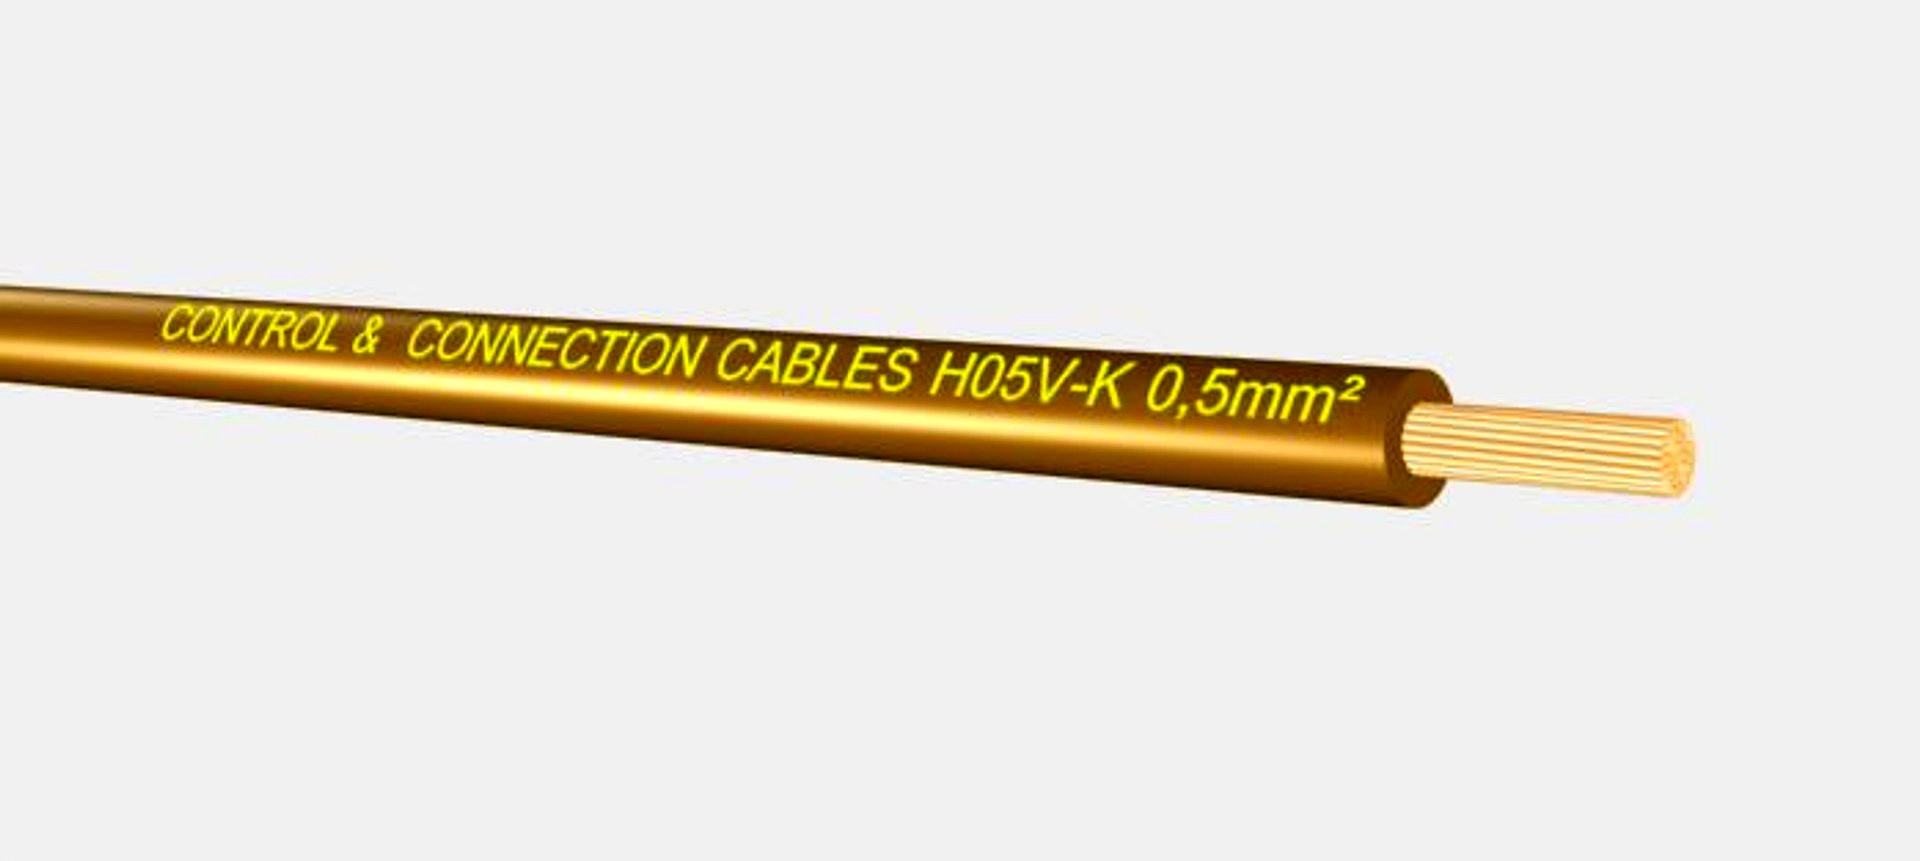 VMDS - H05V-K 0,5 mm2 Flexible installation wire brown.max